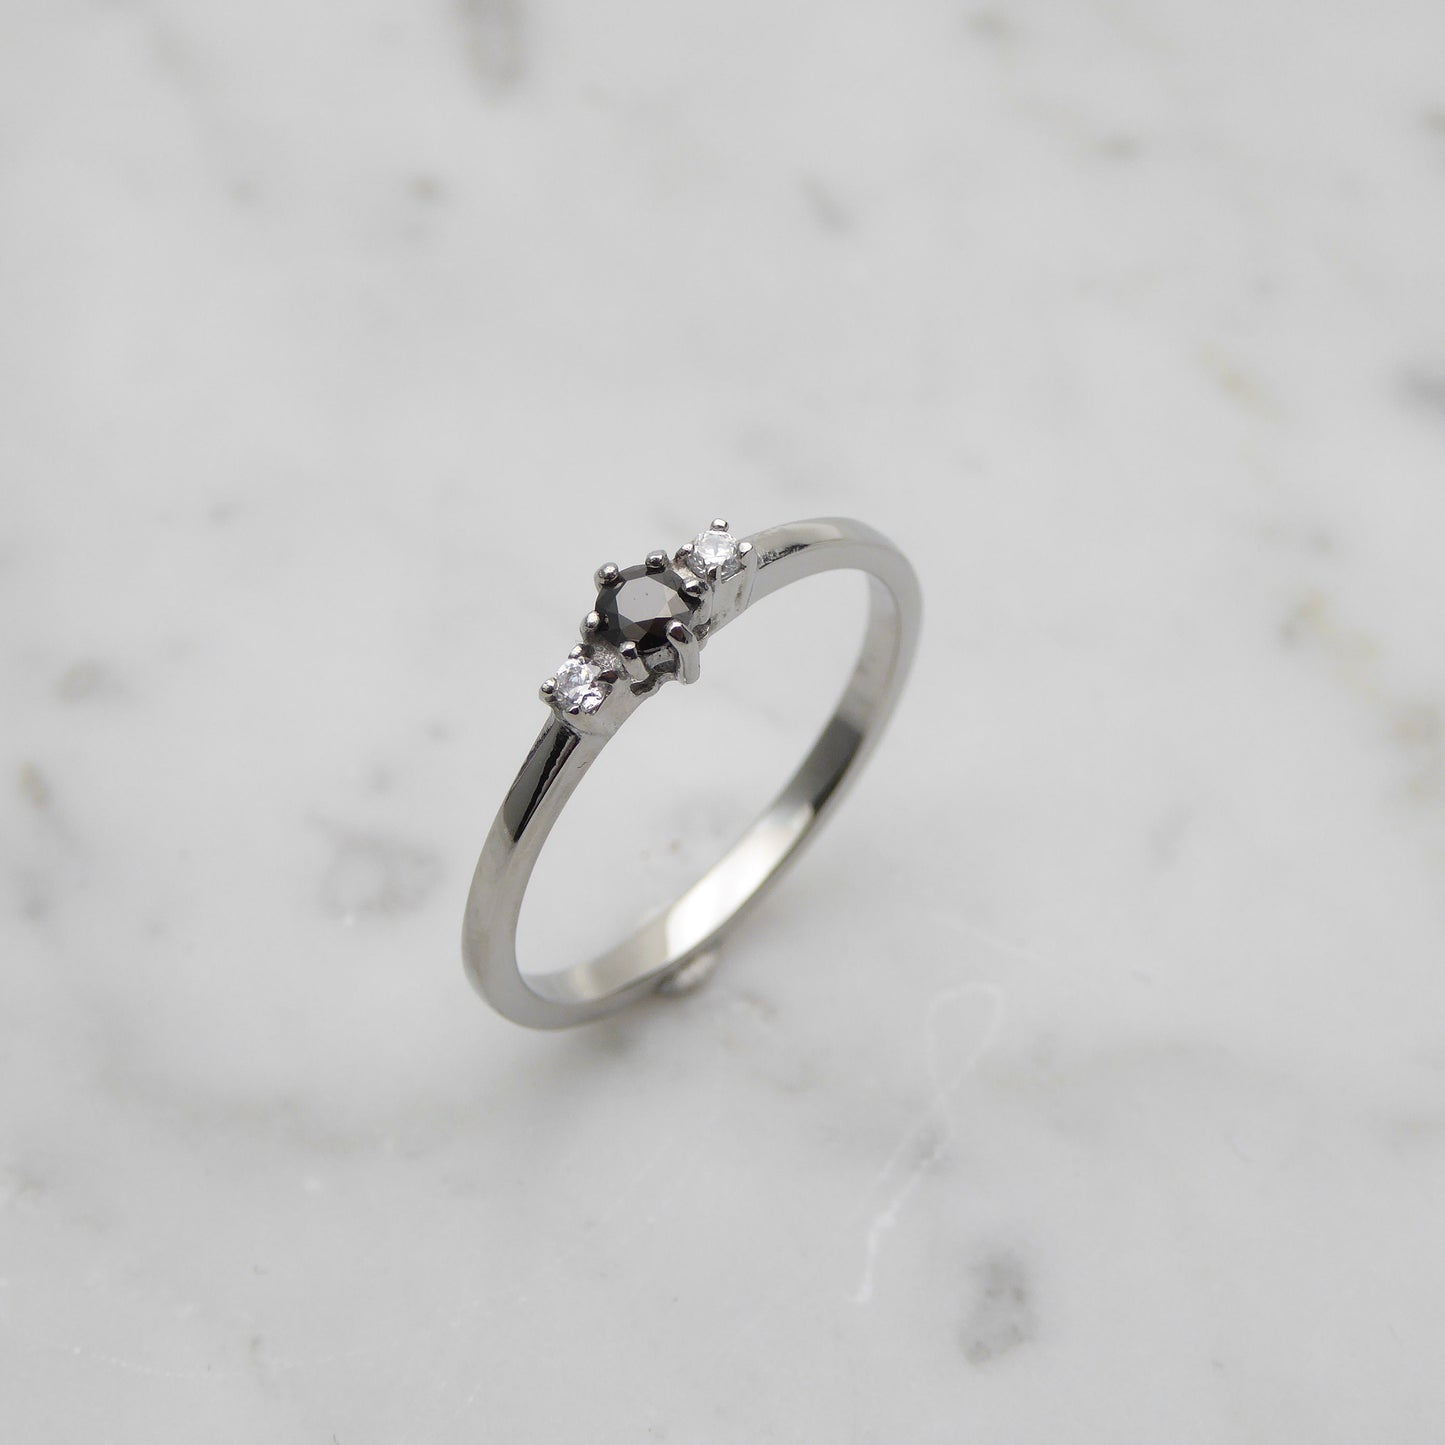 Genuine White and Black moissanite 3 stone Trilogy Ring in White Gold or Titanium  - engagement ring - handmade ring